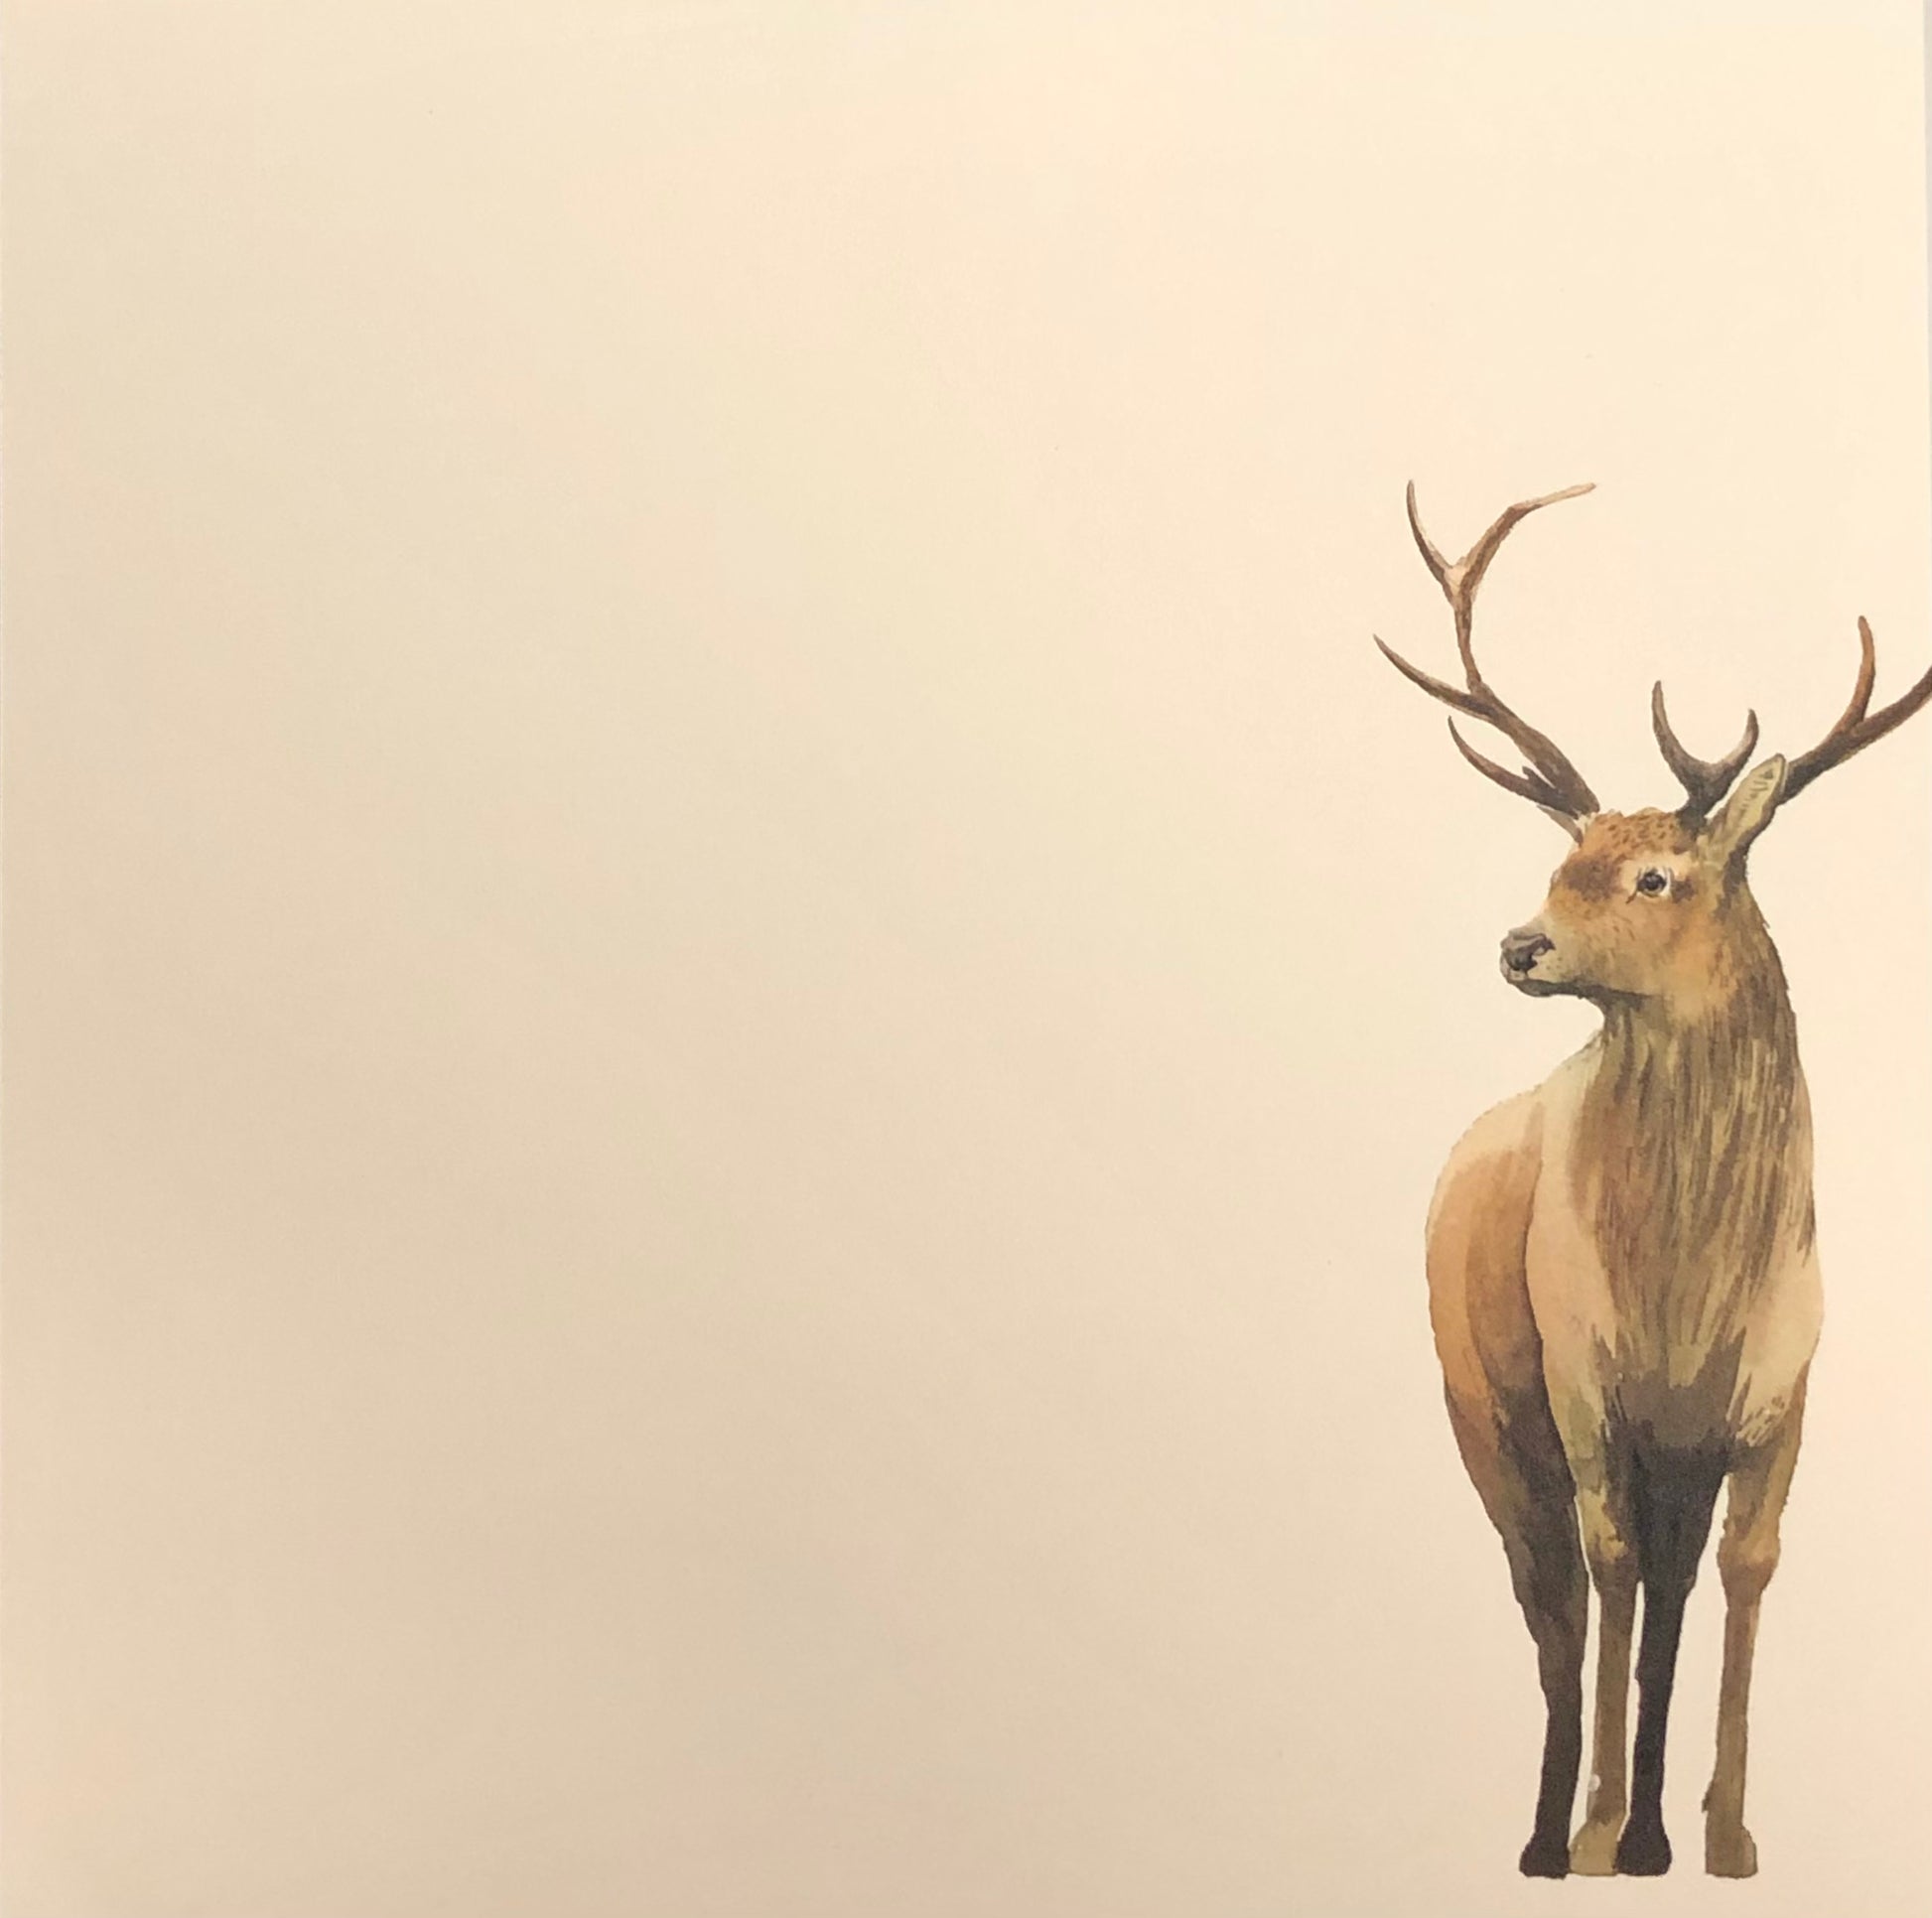 maison de papier cream paper notepad with red stag deer art